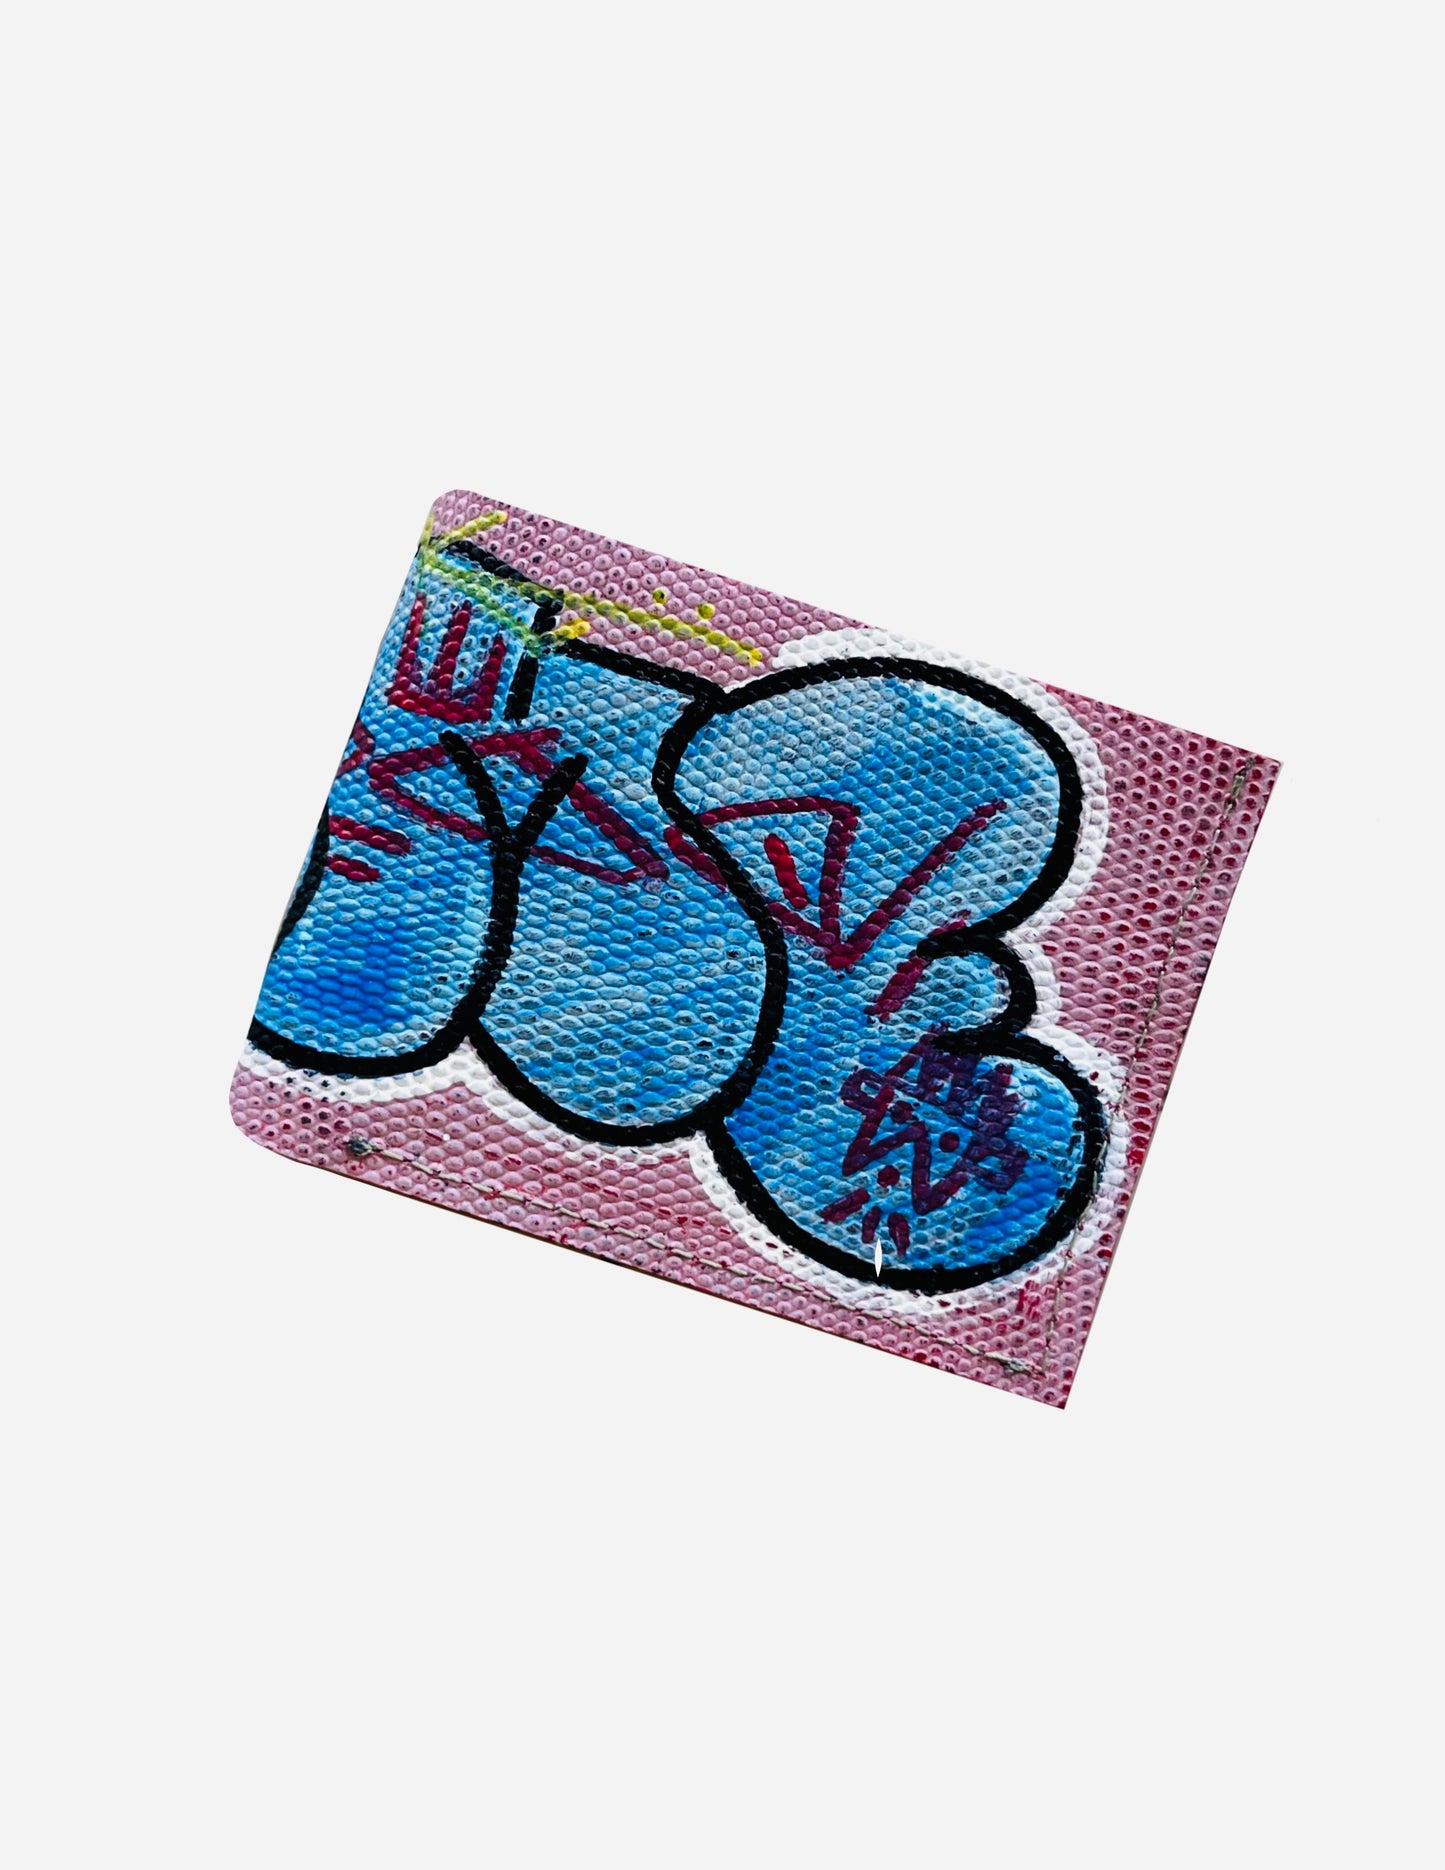 ACME Graffiti Wallet